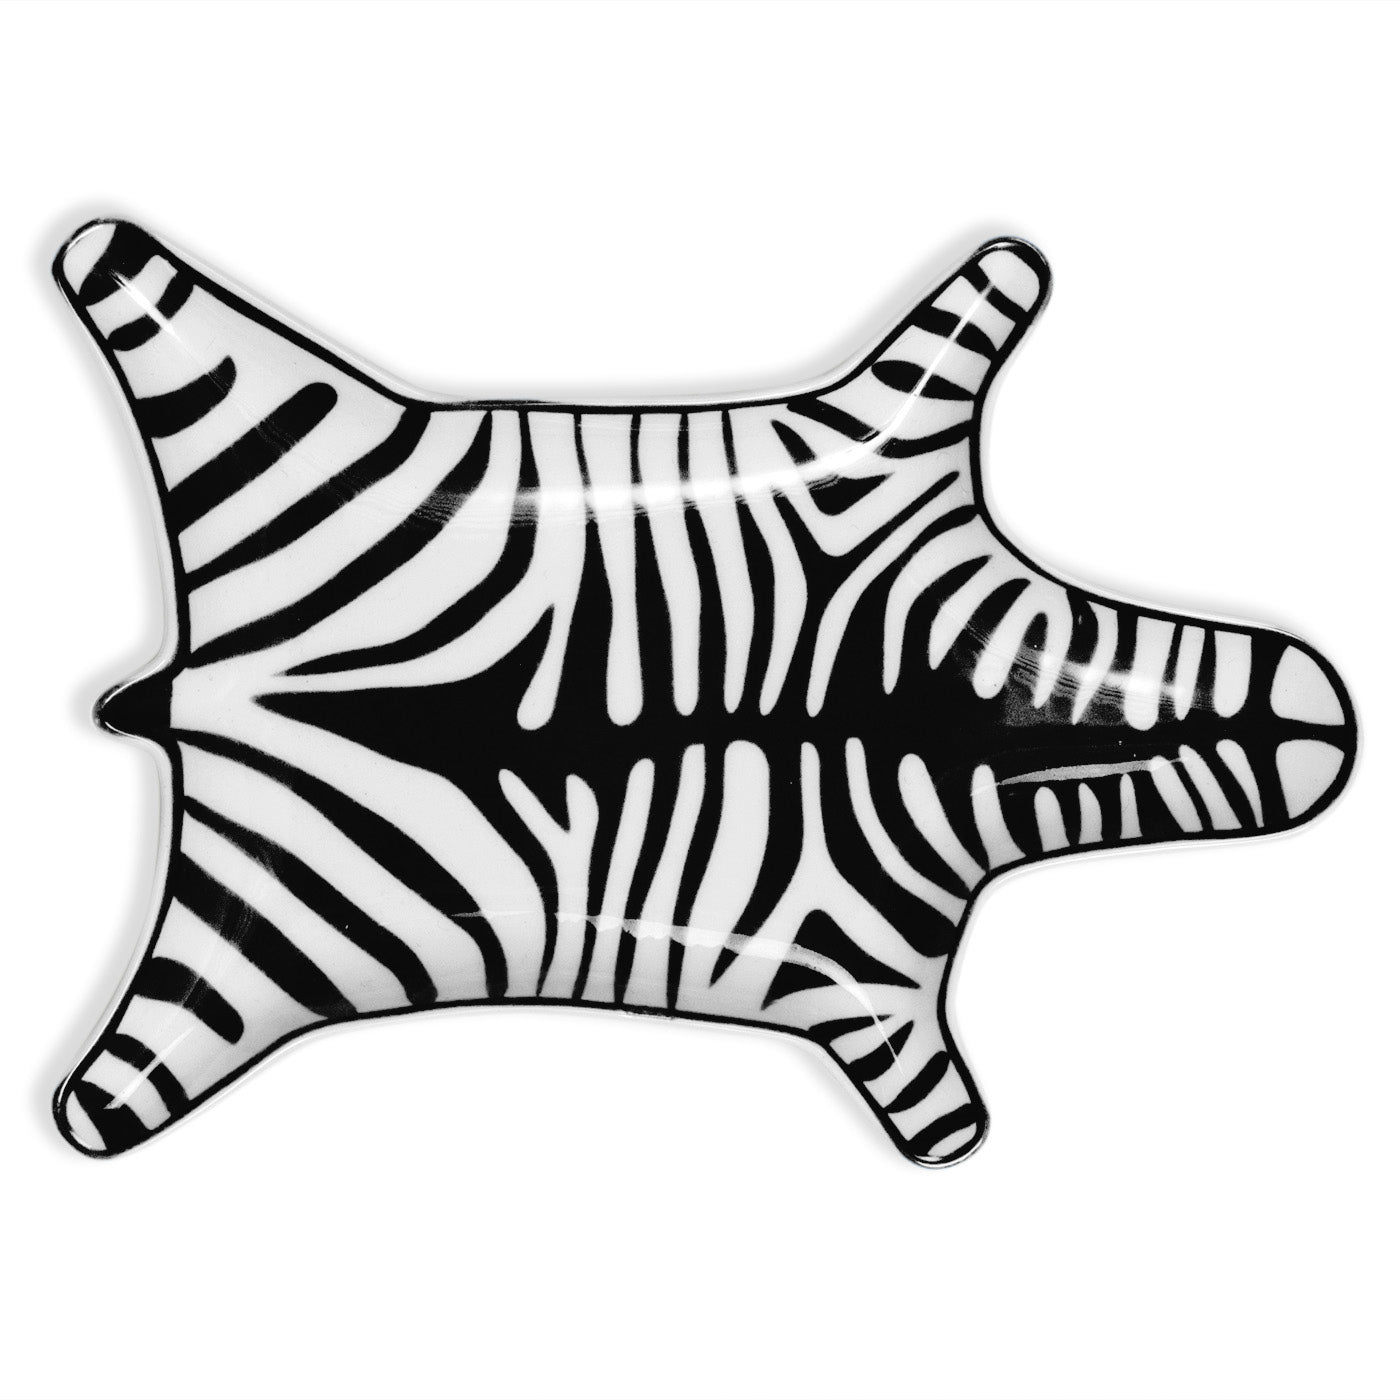 Zebra Stacking Dish - Black and white - 21249